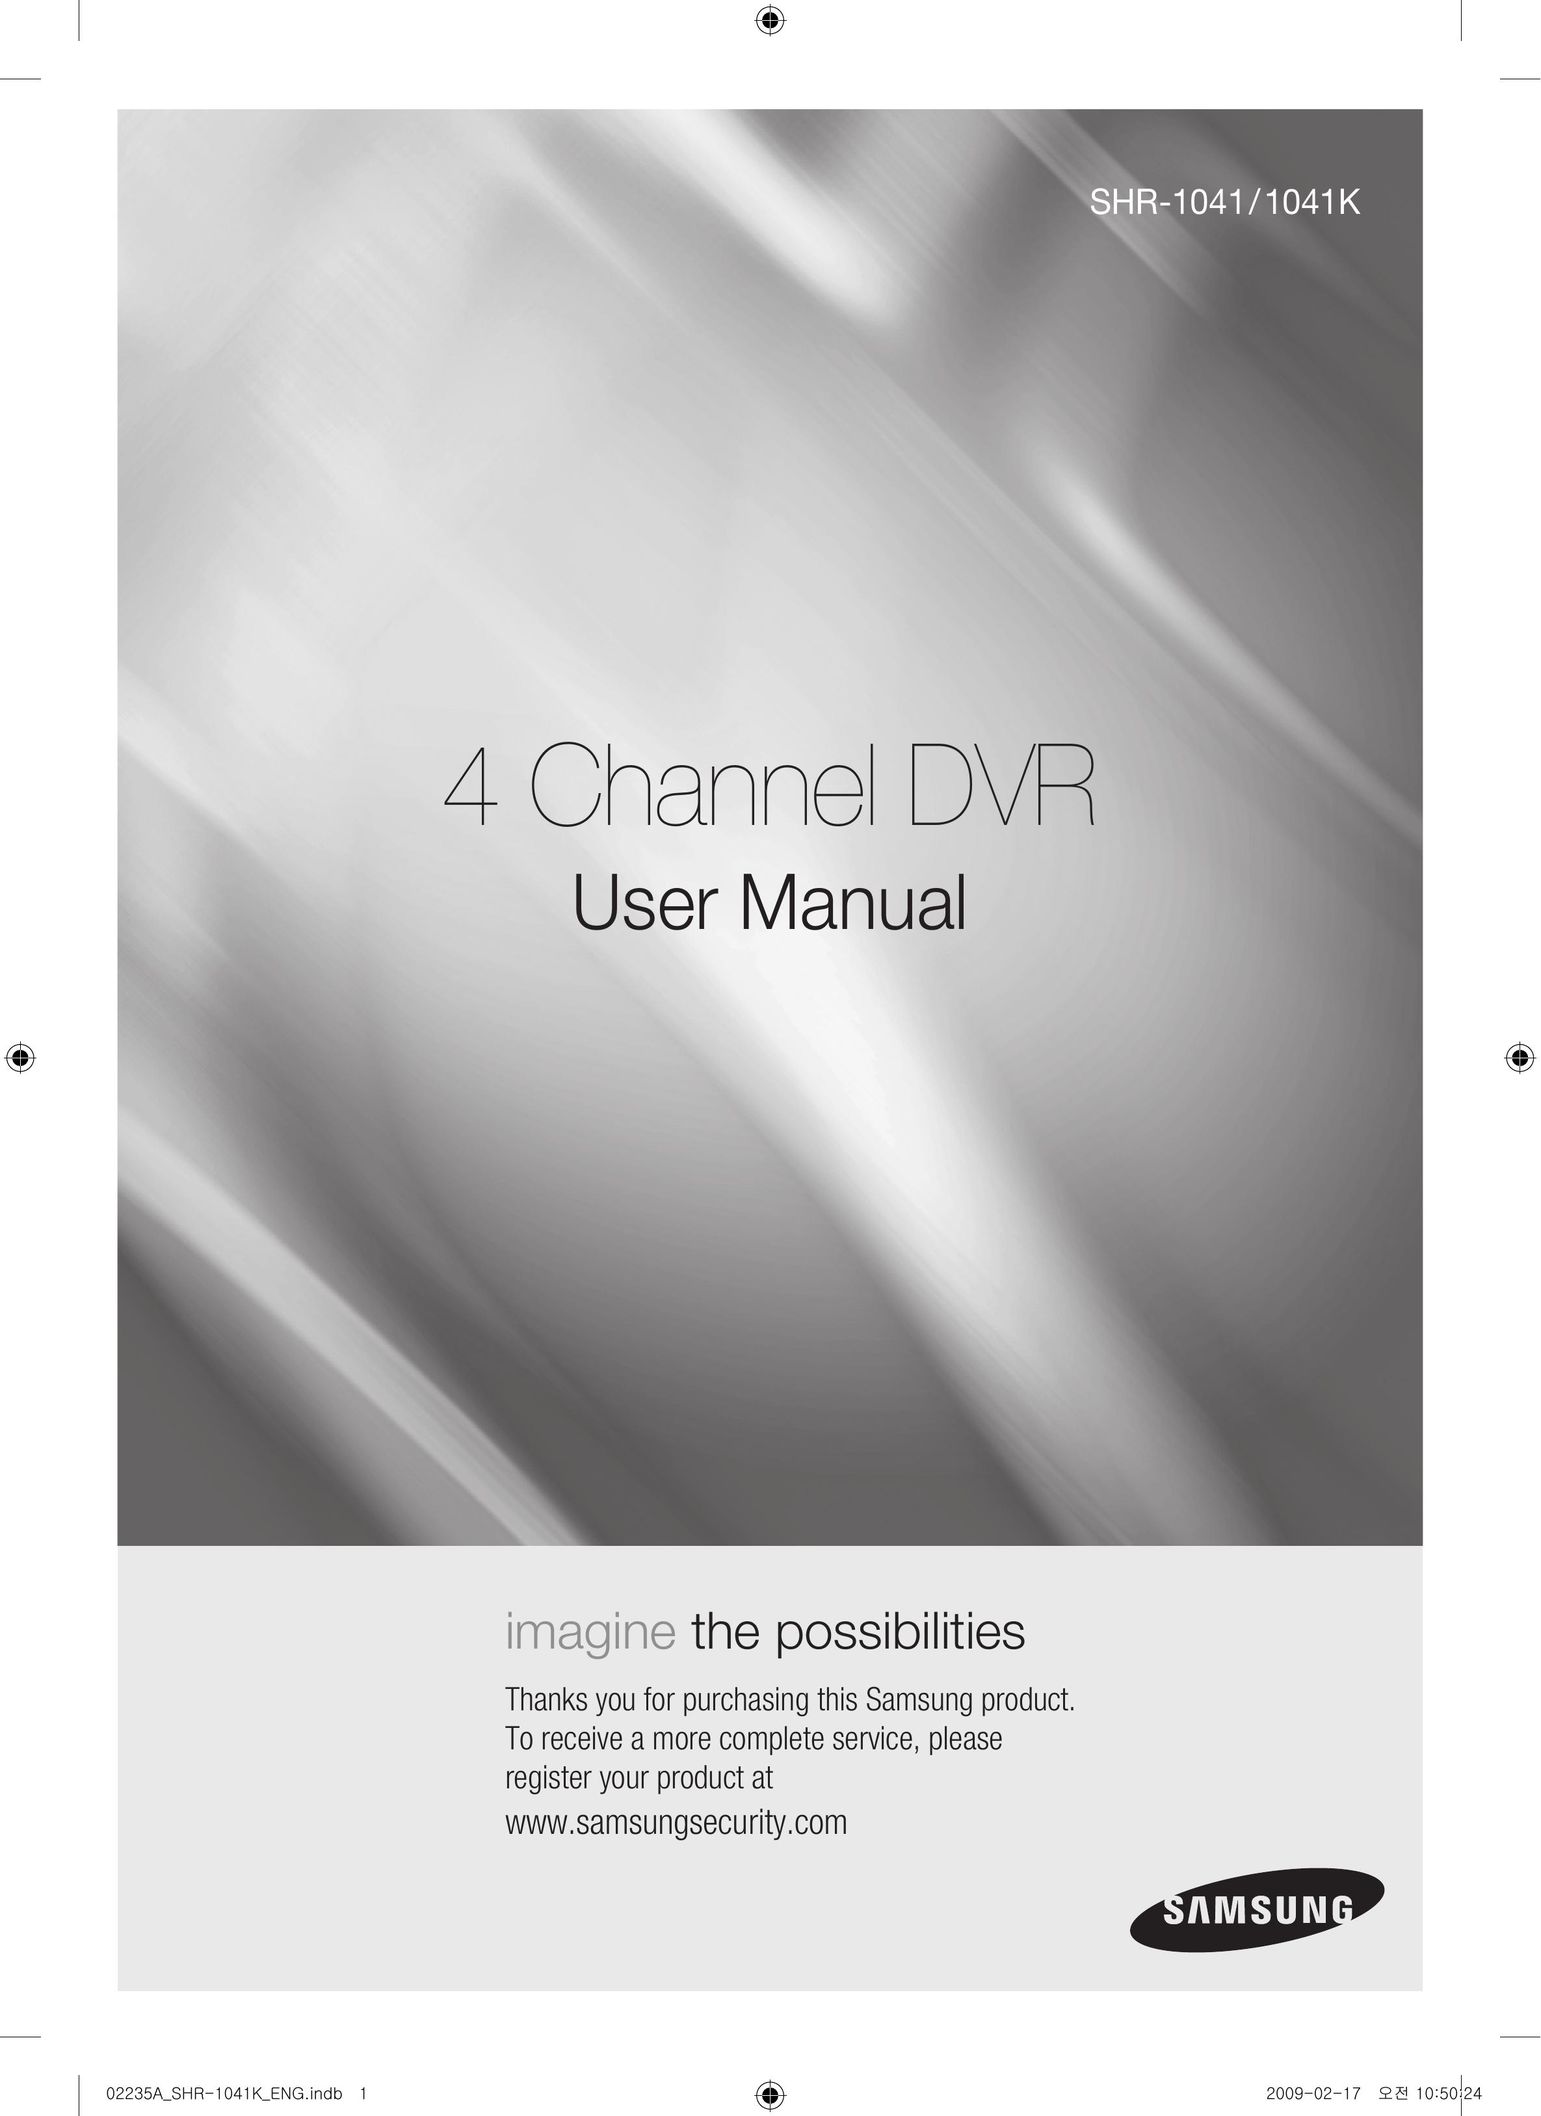 Samsung SHR-1041 DVR User Manual